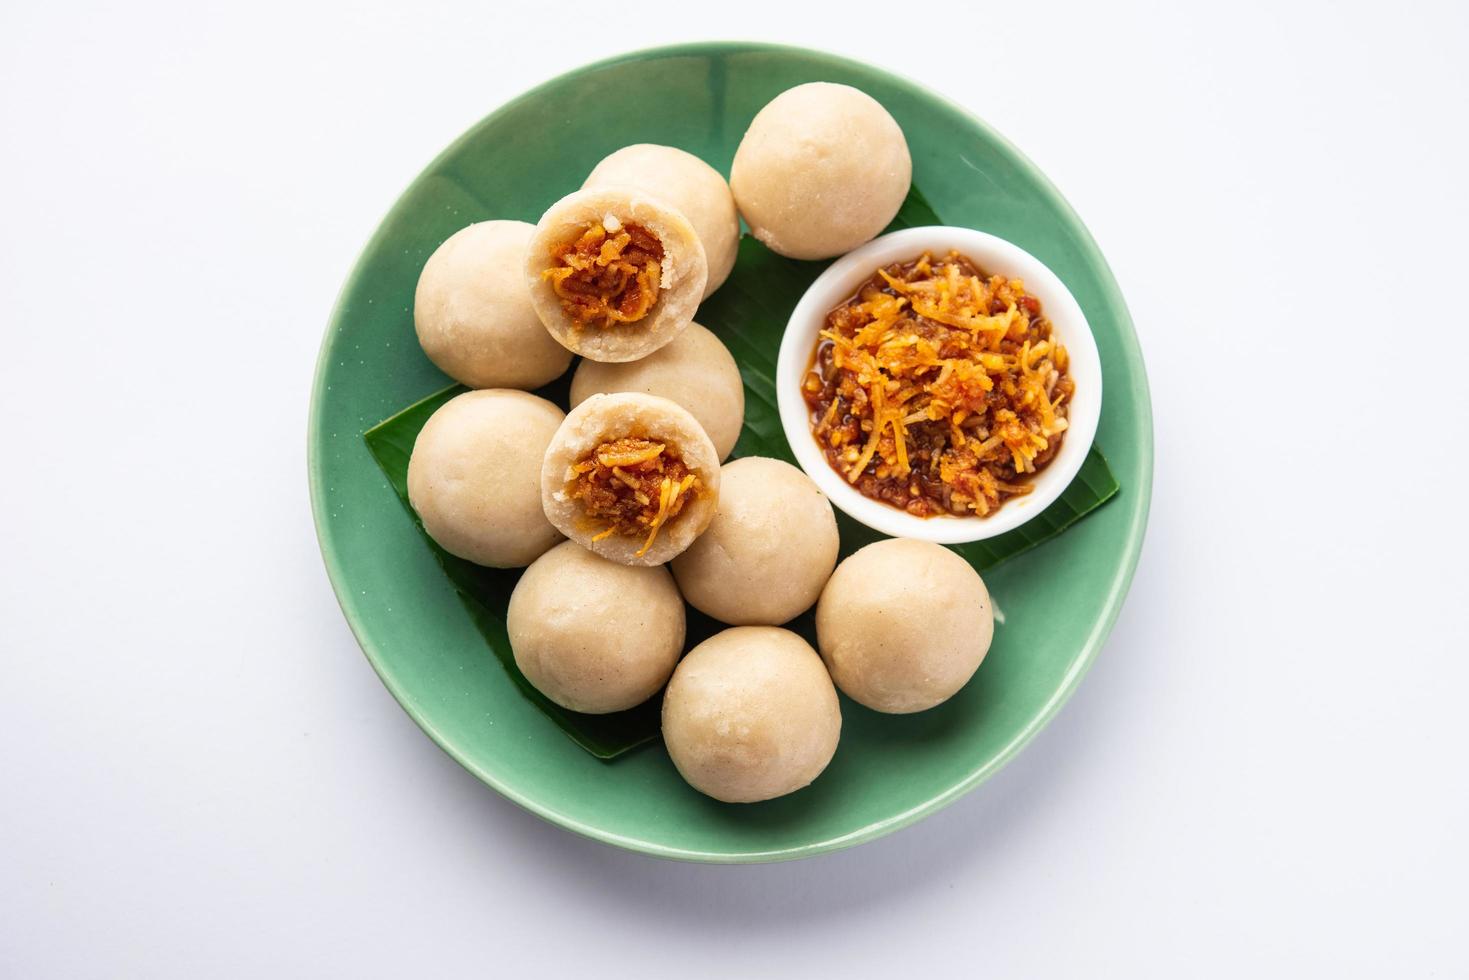 kozhukatta or kolukattai pidi is Steamed dumplings made with rice flour, filling coconut, jaggery photo